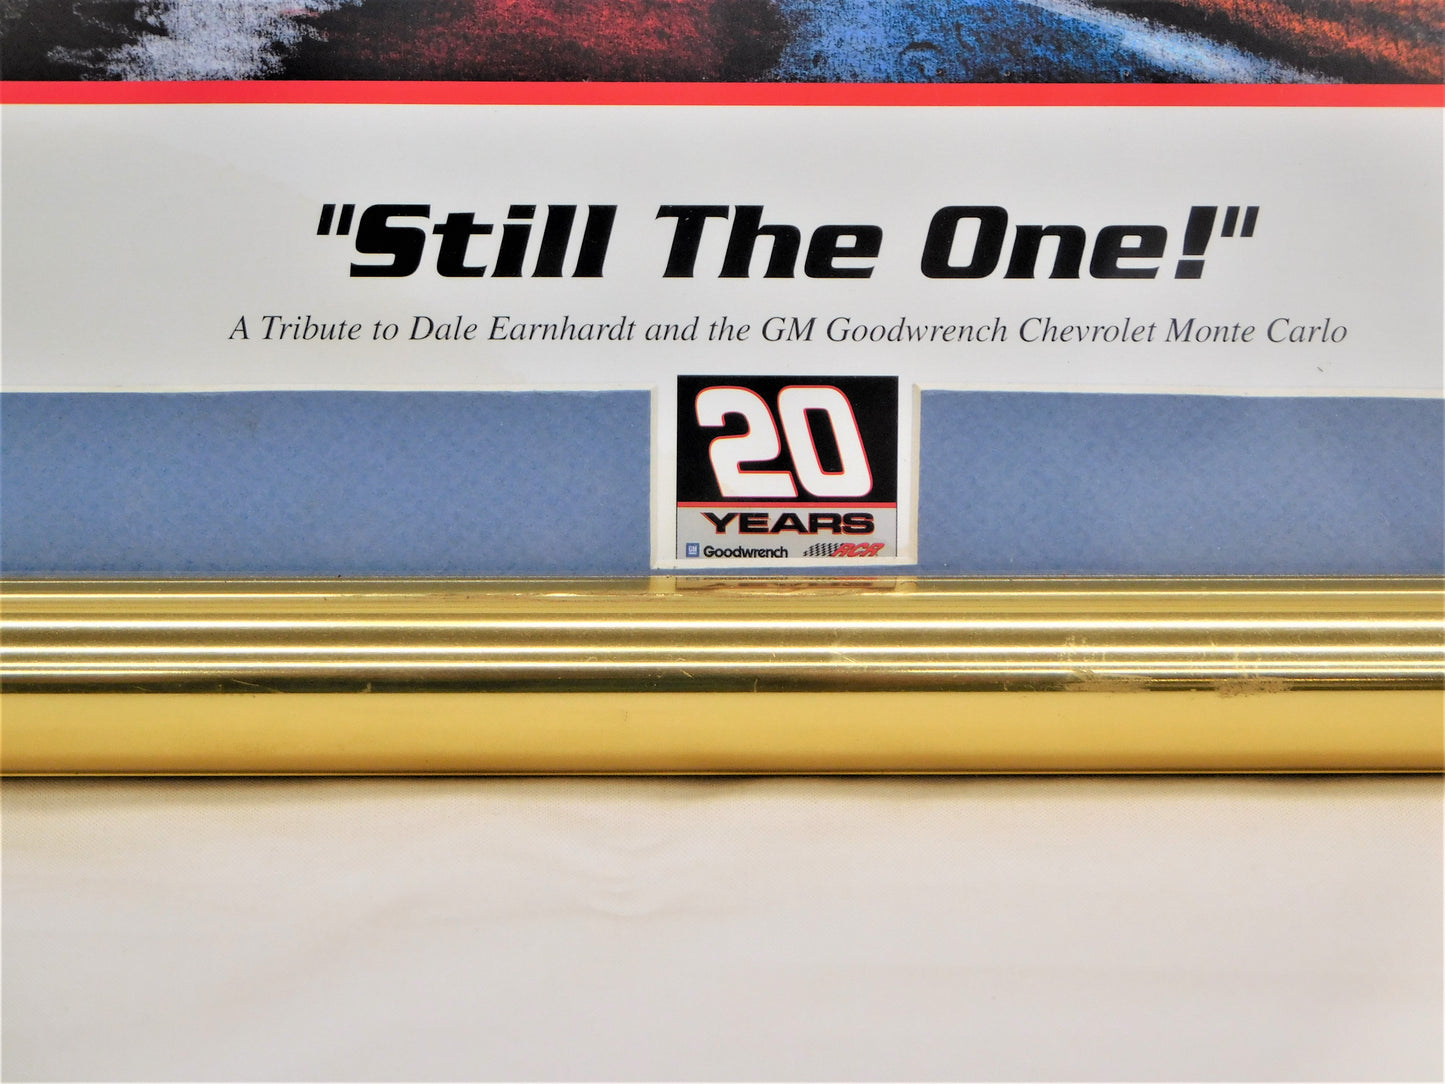 2005 Sam Bass Earnhardt "Still the One" Framed Print